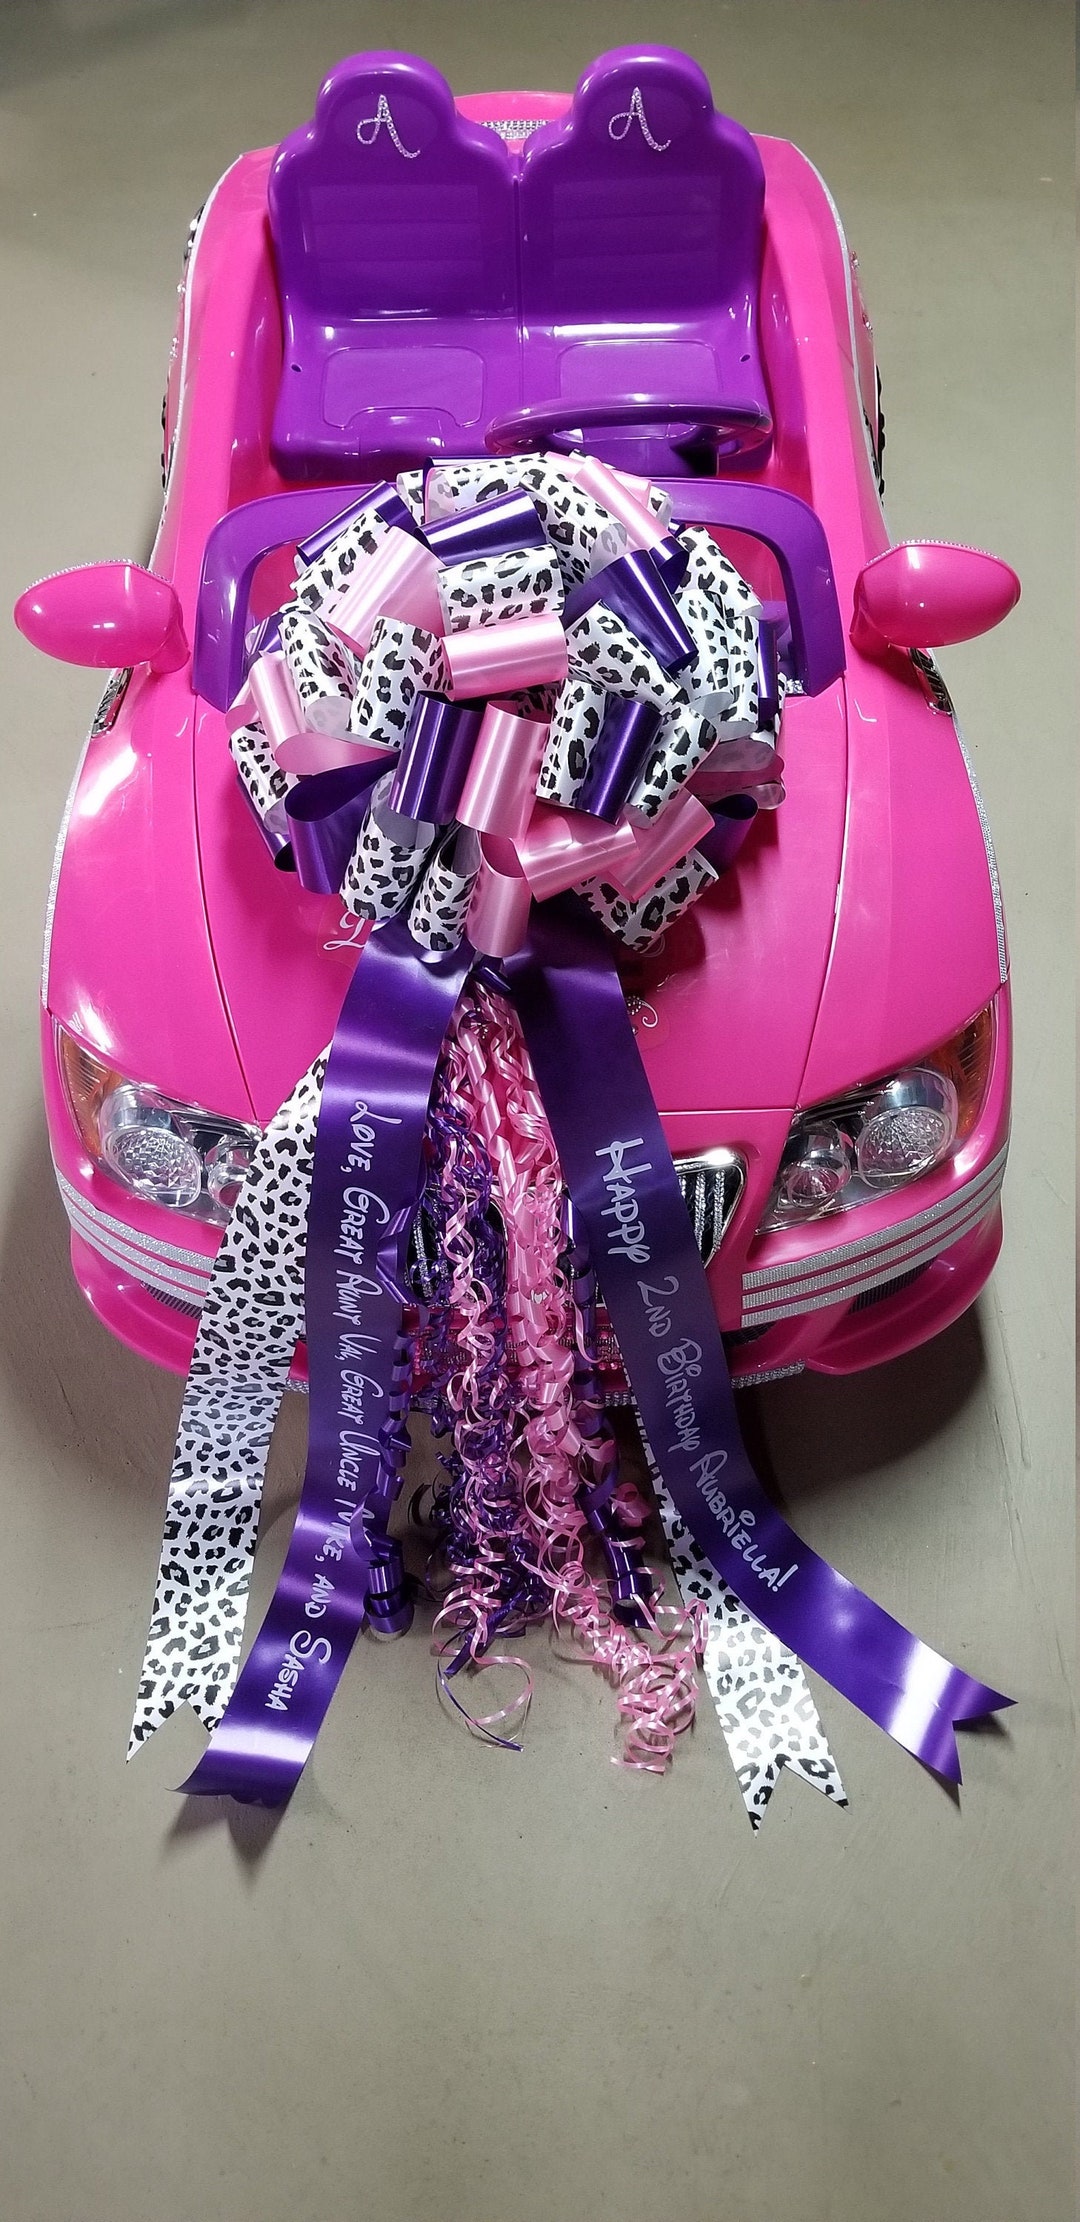 Curly Ribbon Gift Bow, Pink/Hot Pink Metallic